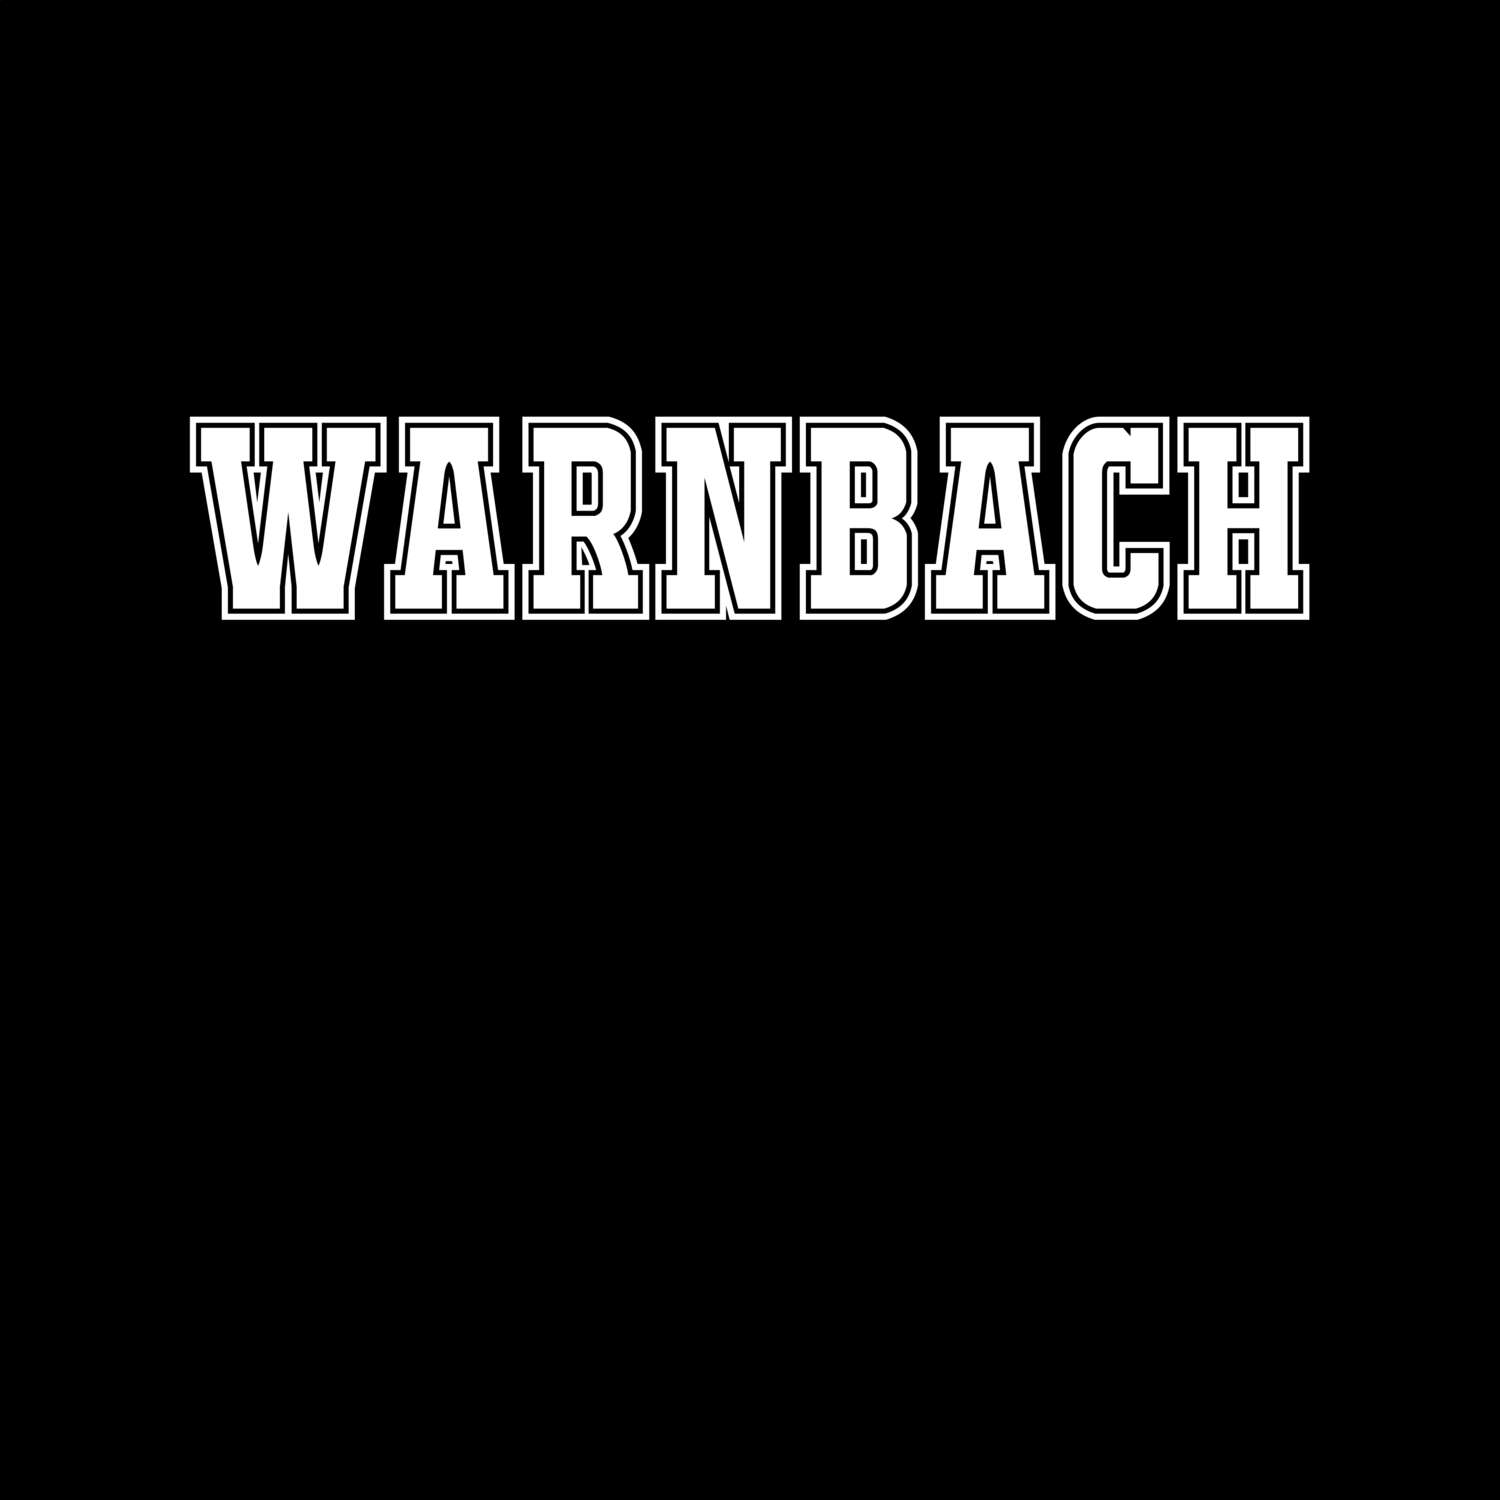 Warnbach T-Shirt »Classic«